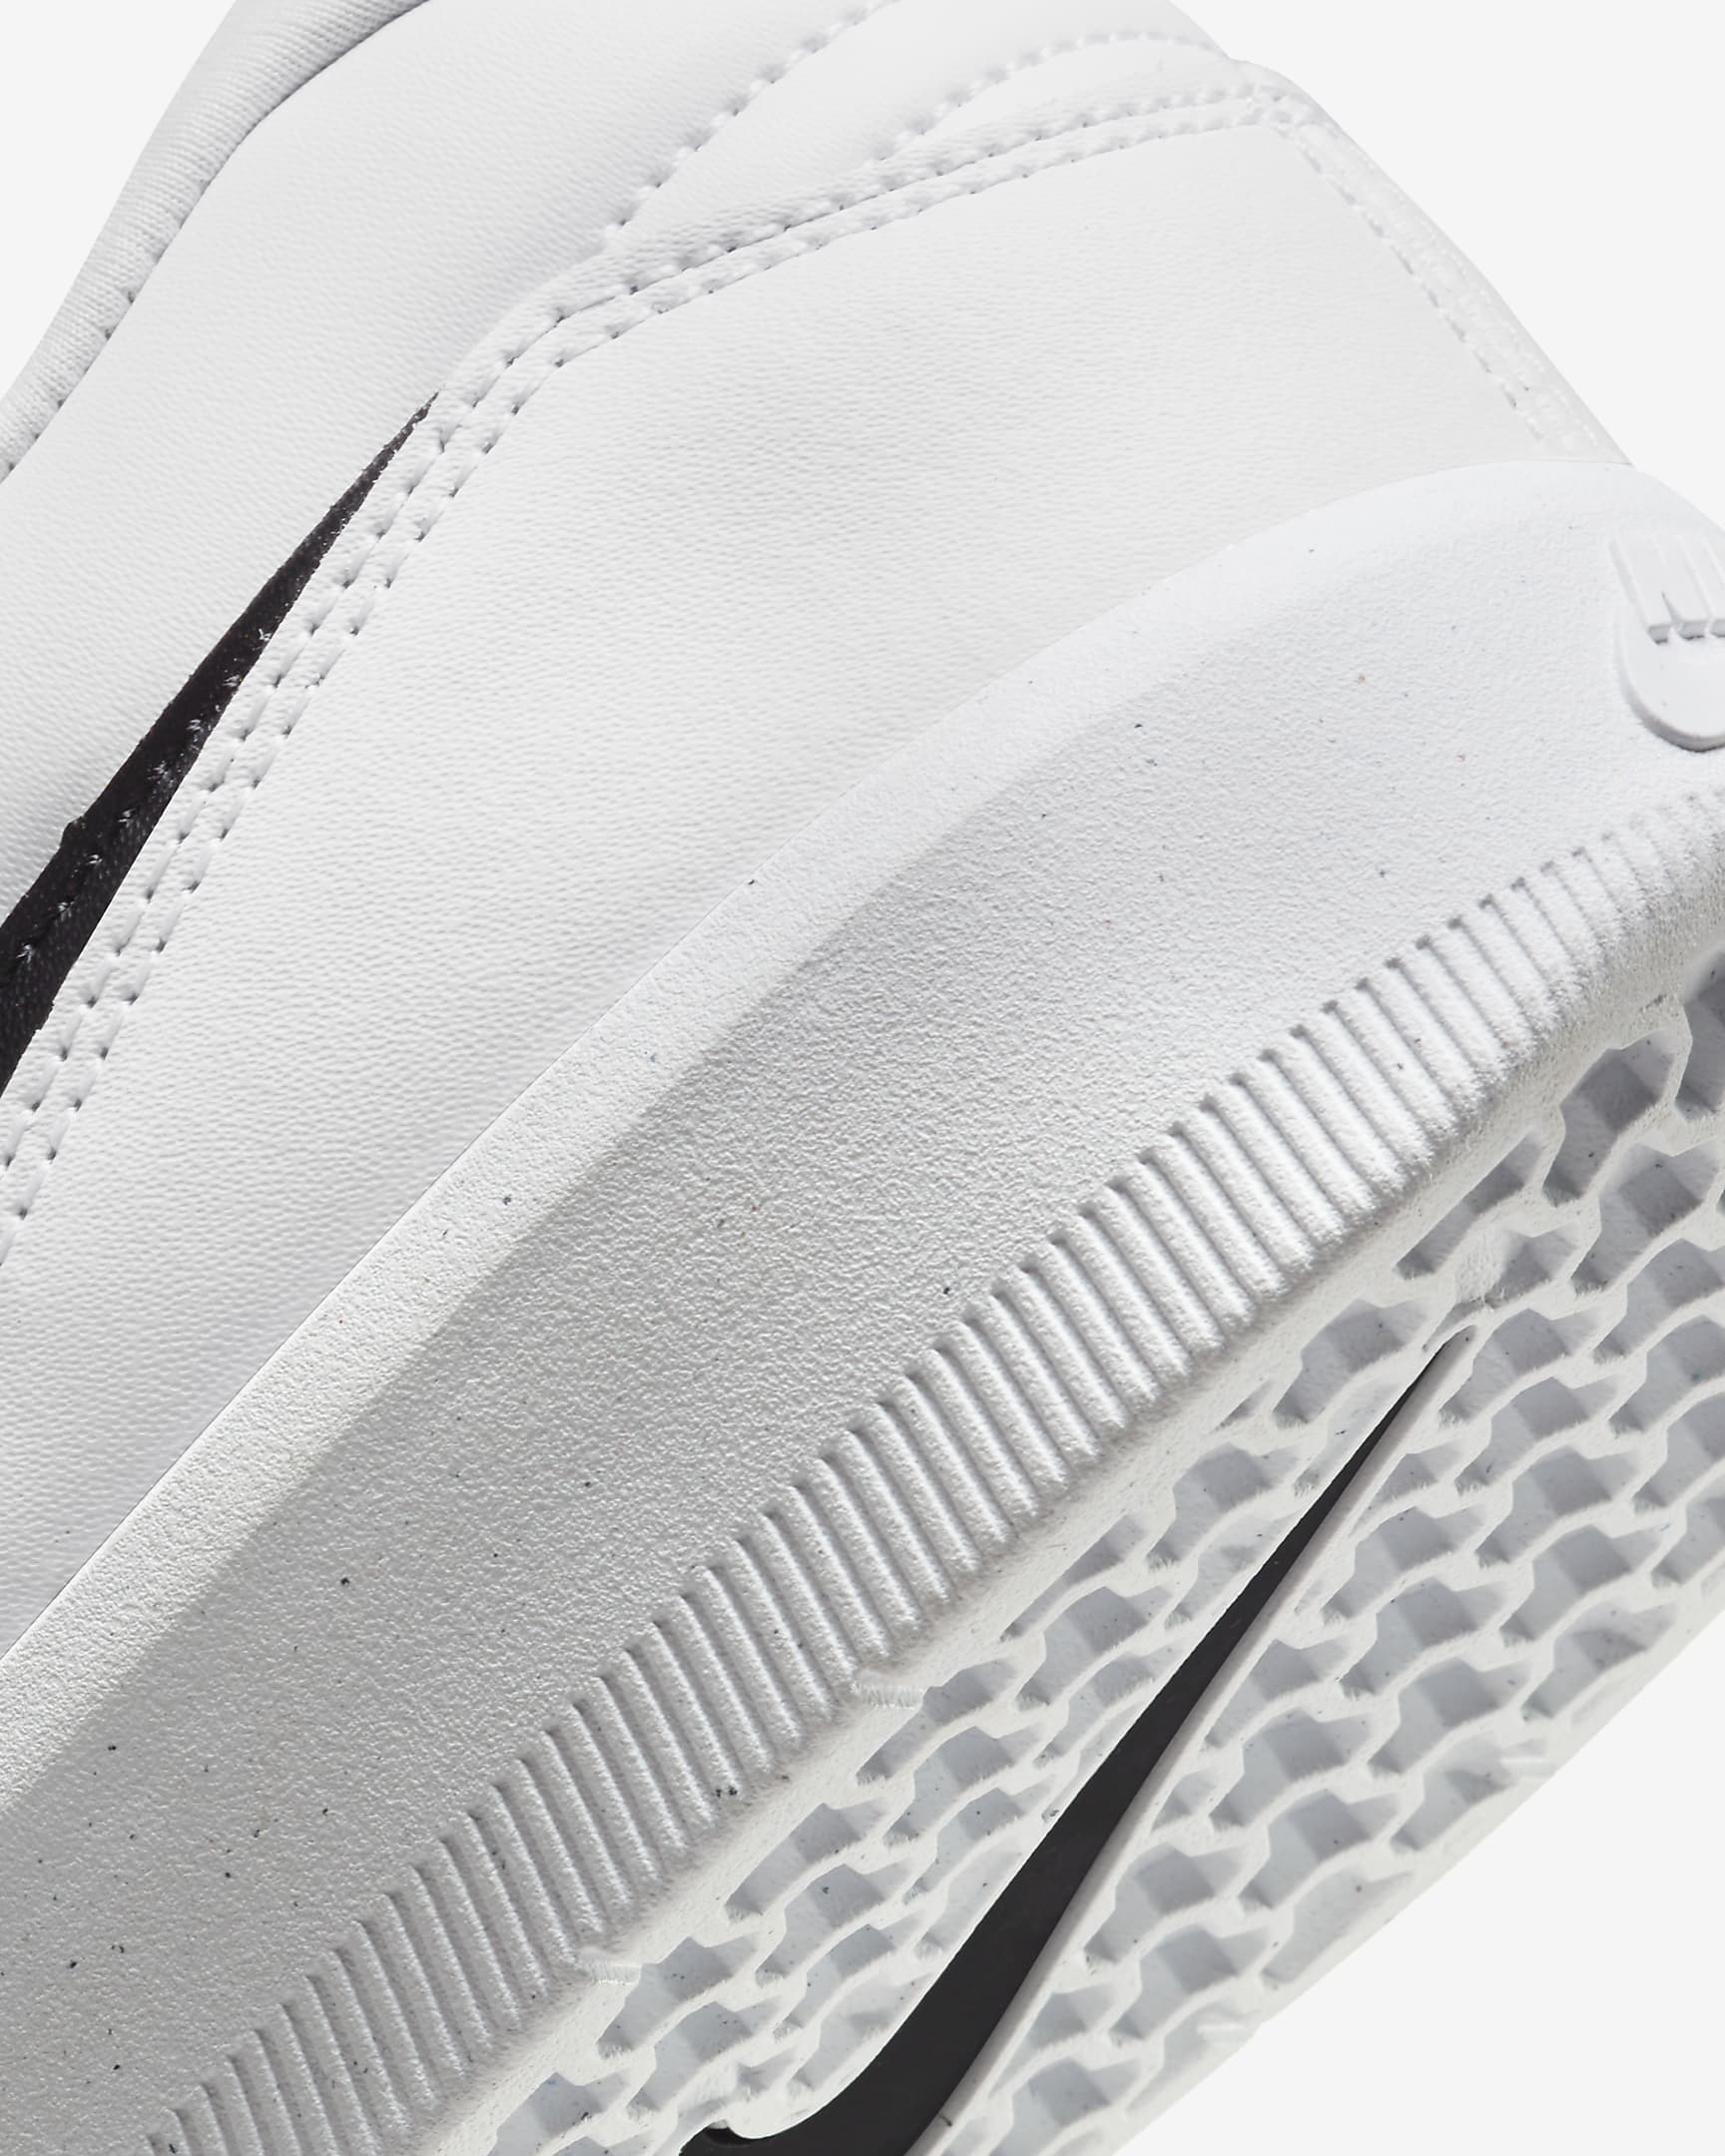 Chaussure de skateboard Nike SB Force 58 Premium - Blanc/Blanc/Blanc/Noir